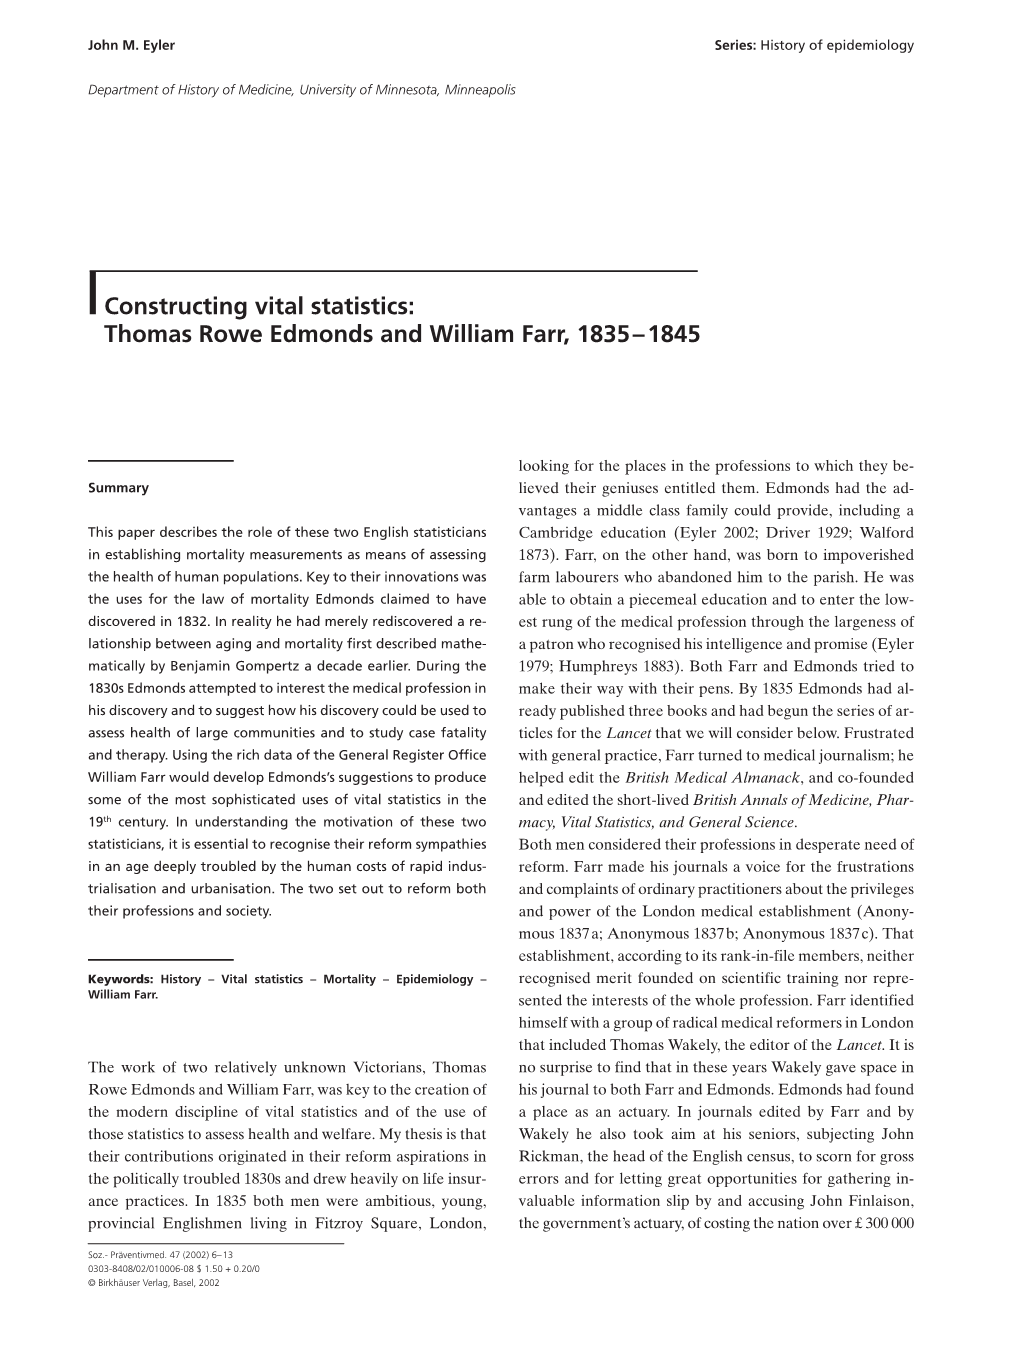 Constructing Vital Statistics: Thomas Rowe Edmonds and William Farr, 1835–1845